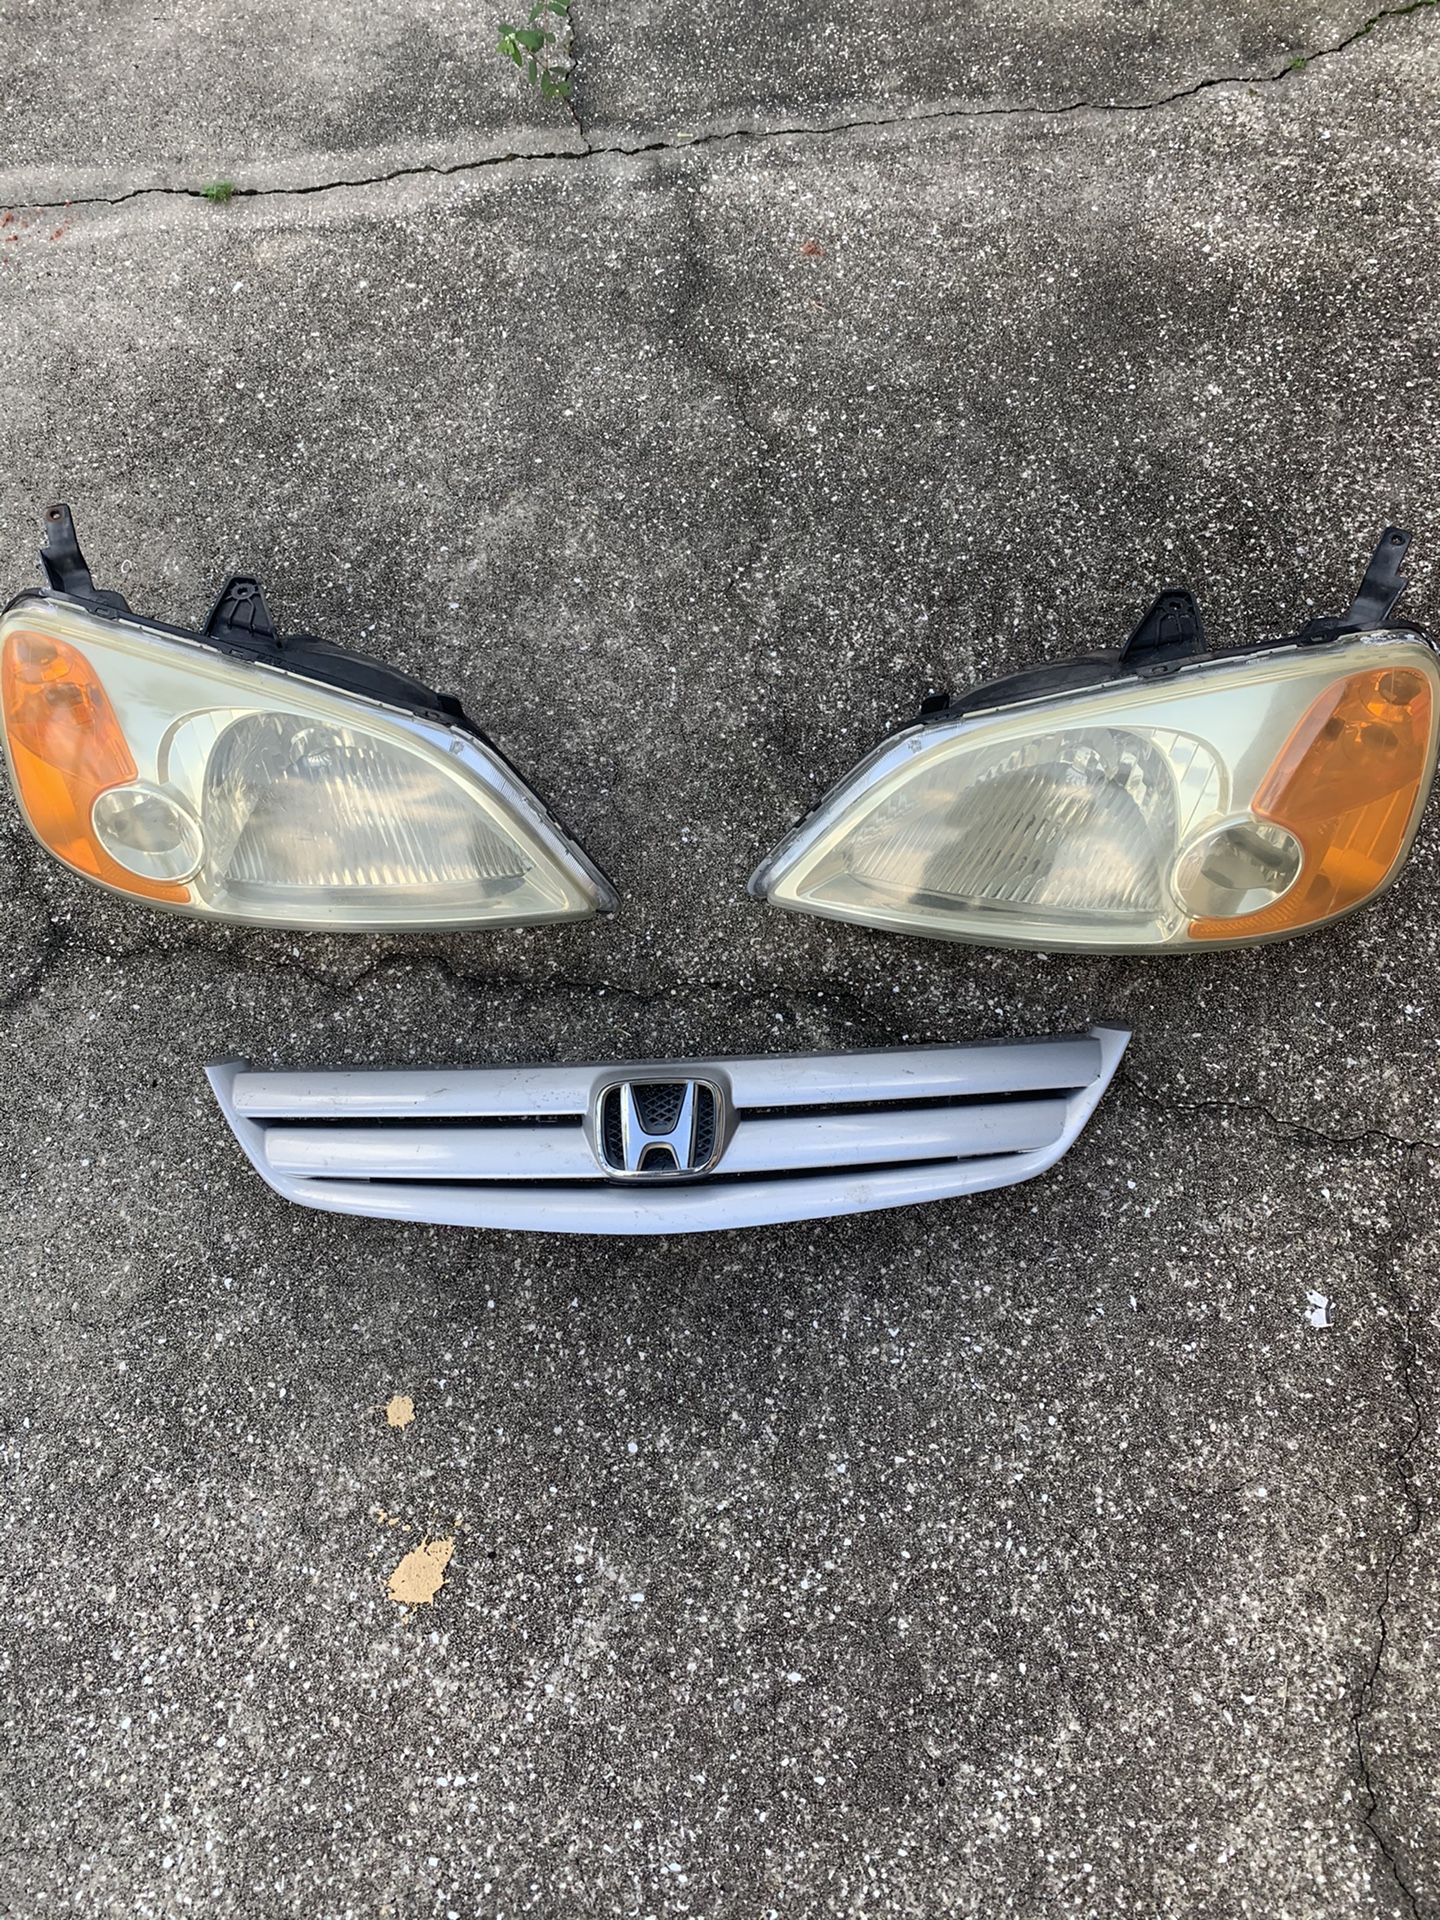 Honda Civic 03 stock headlights & grill